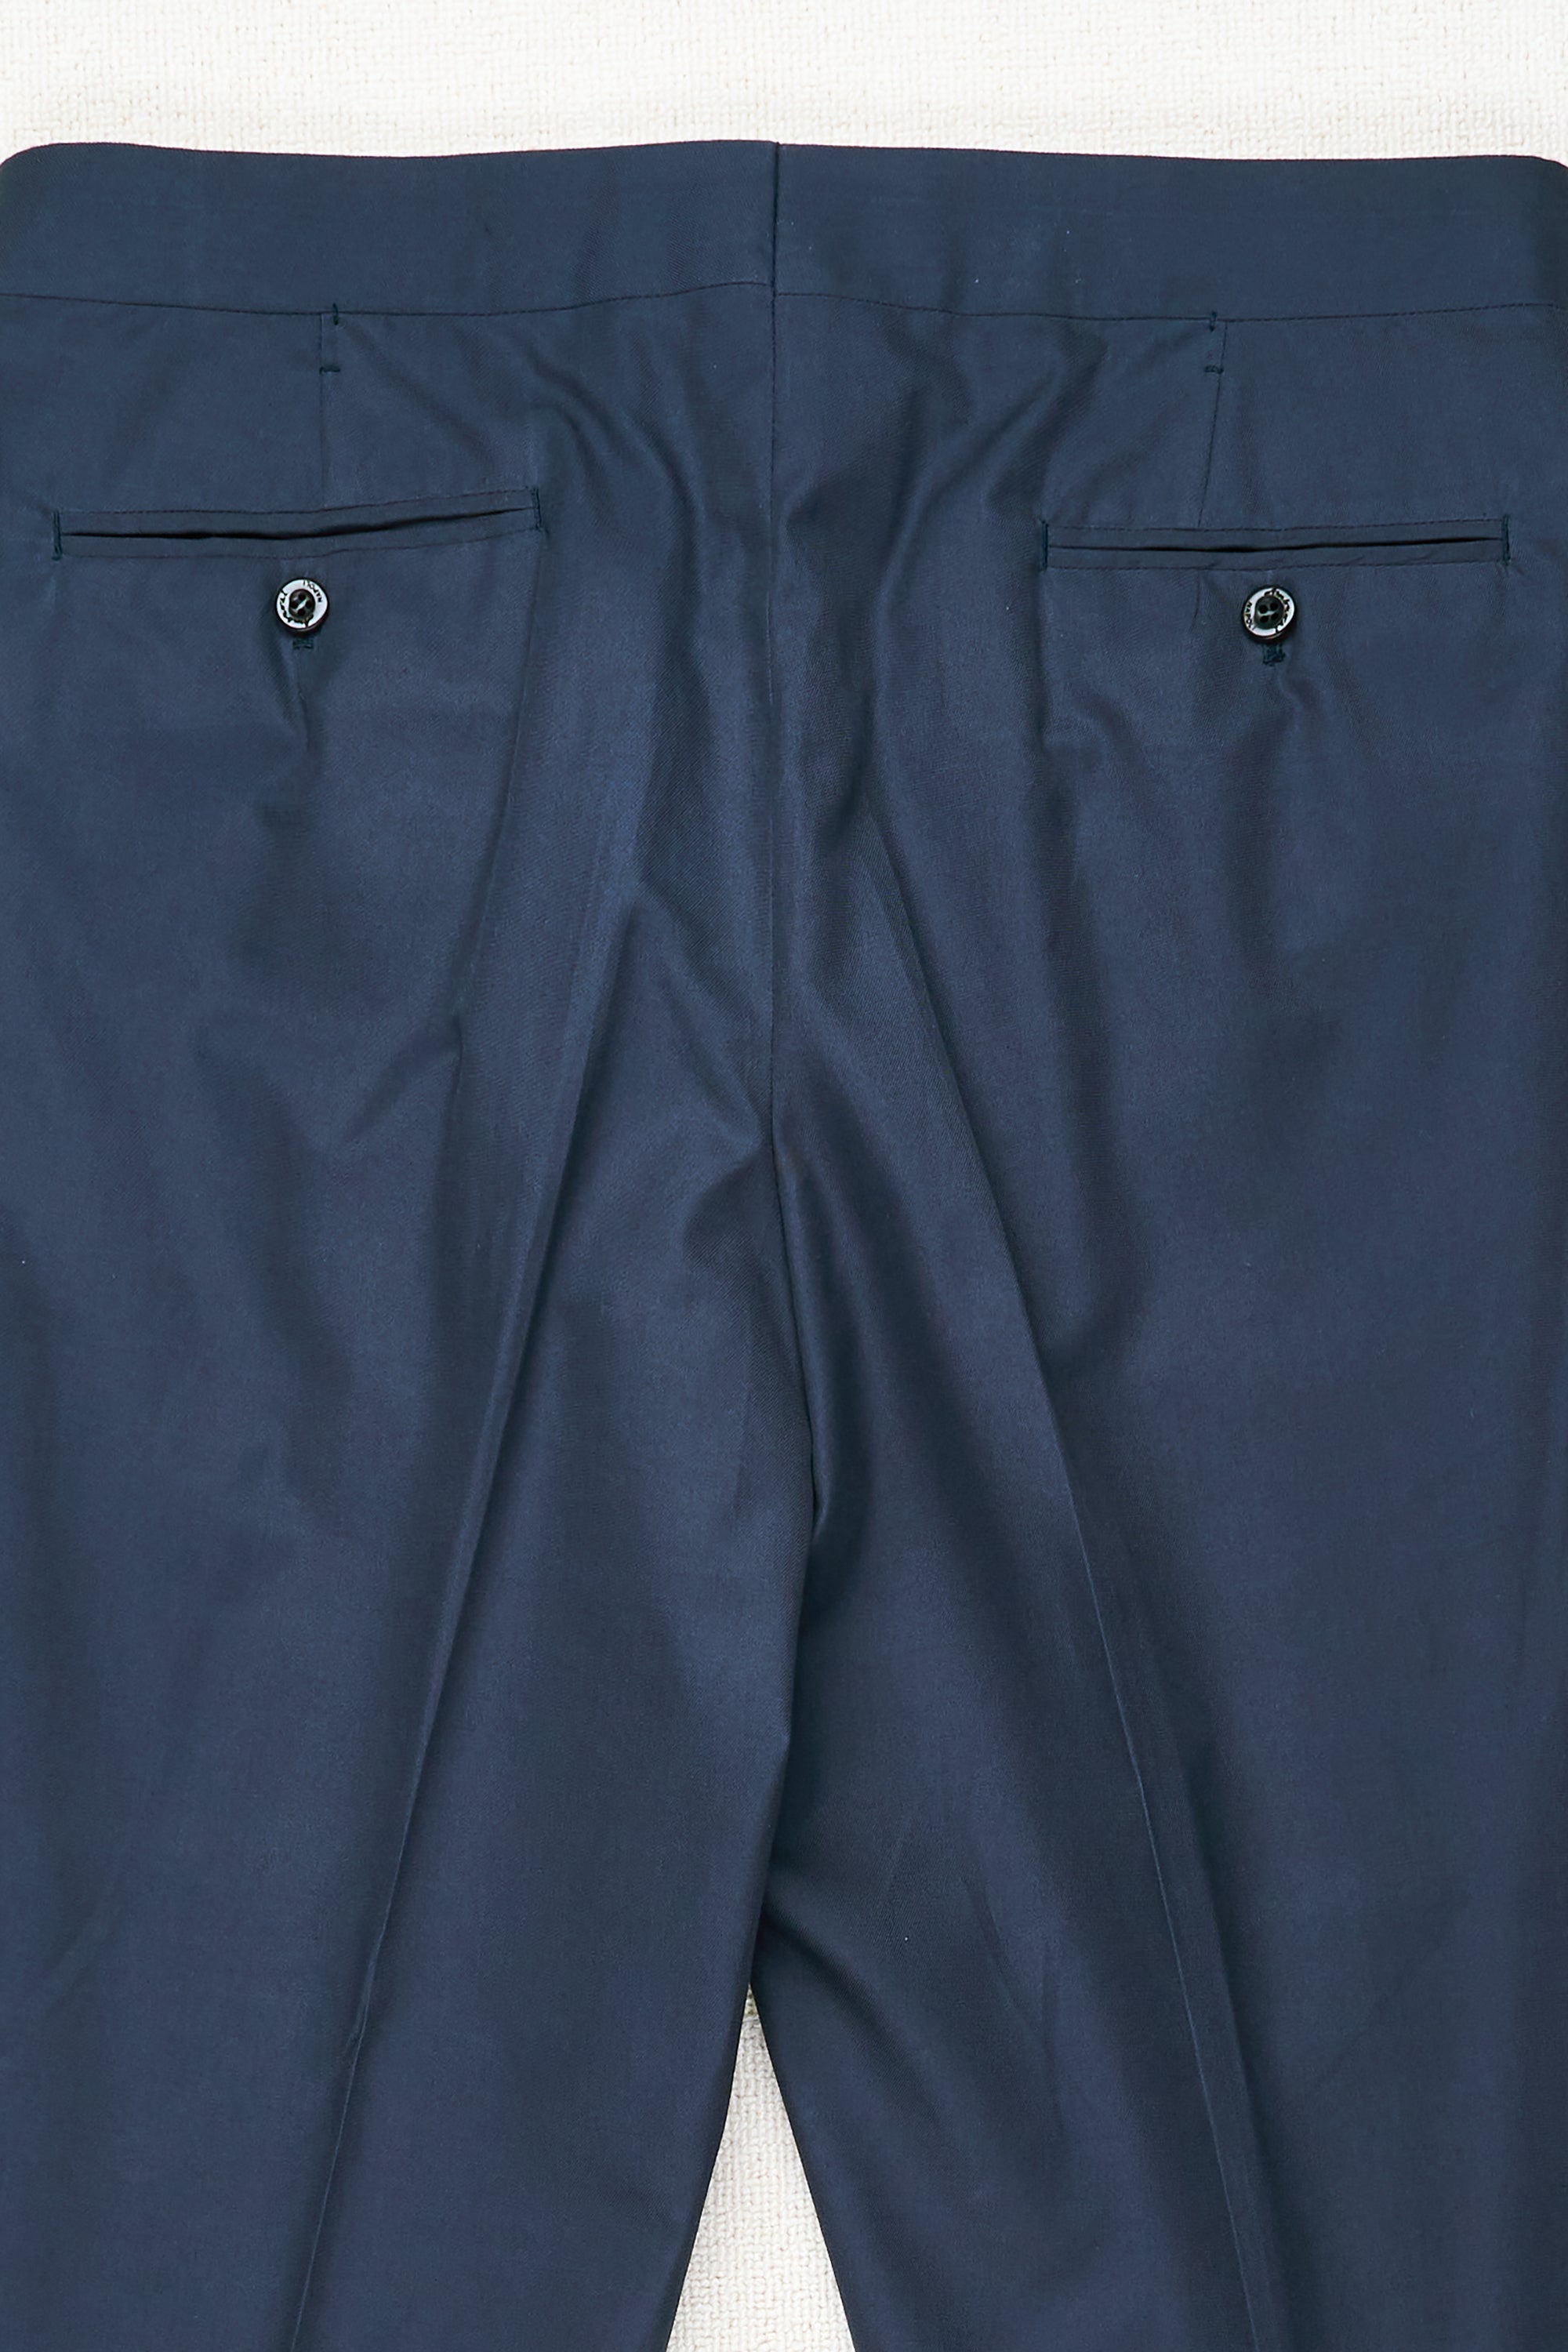 Ambrosi Napoli Navy Cotton Flat Front Trousers Bespoke